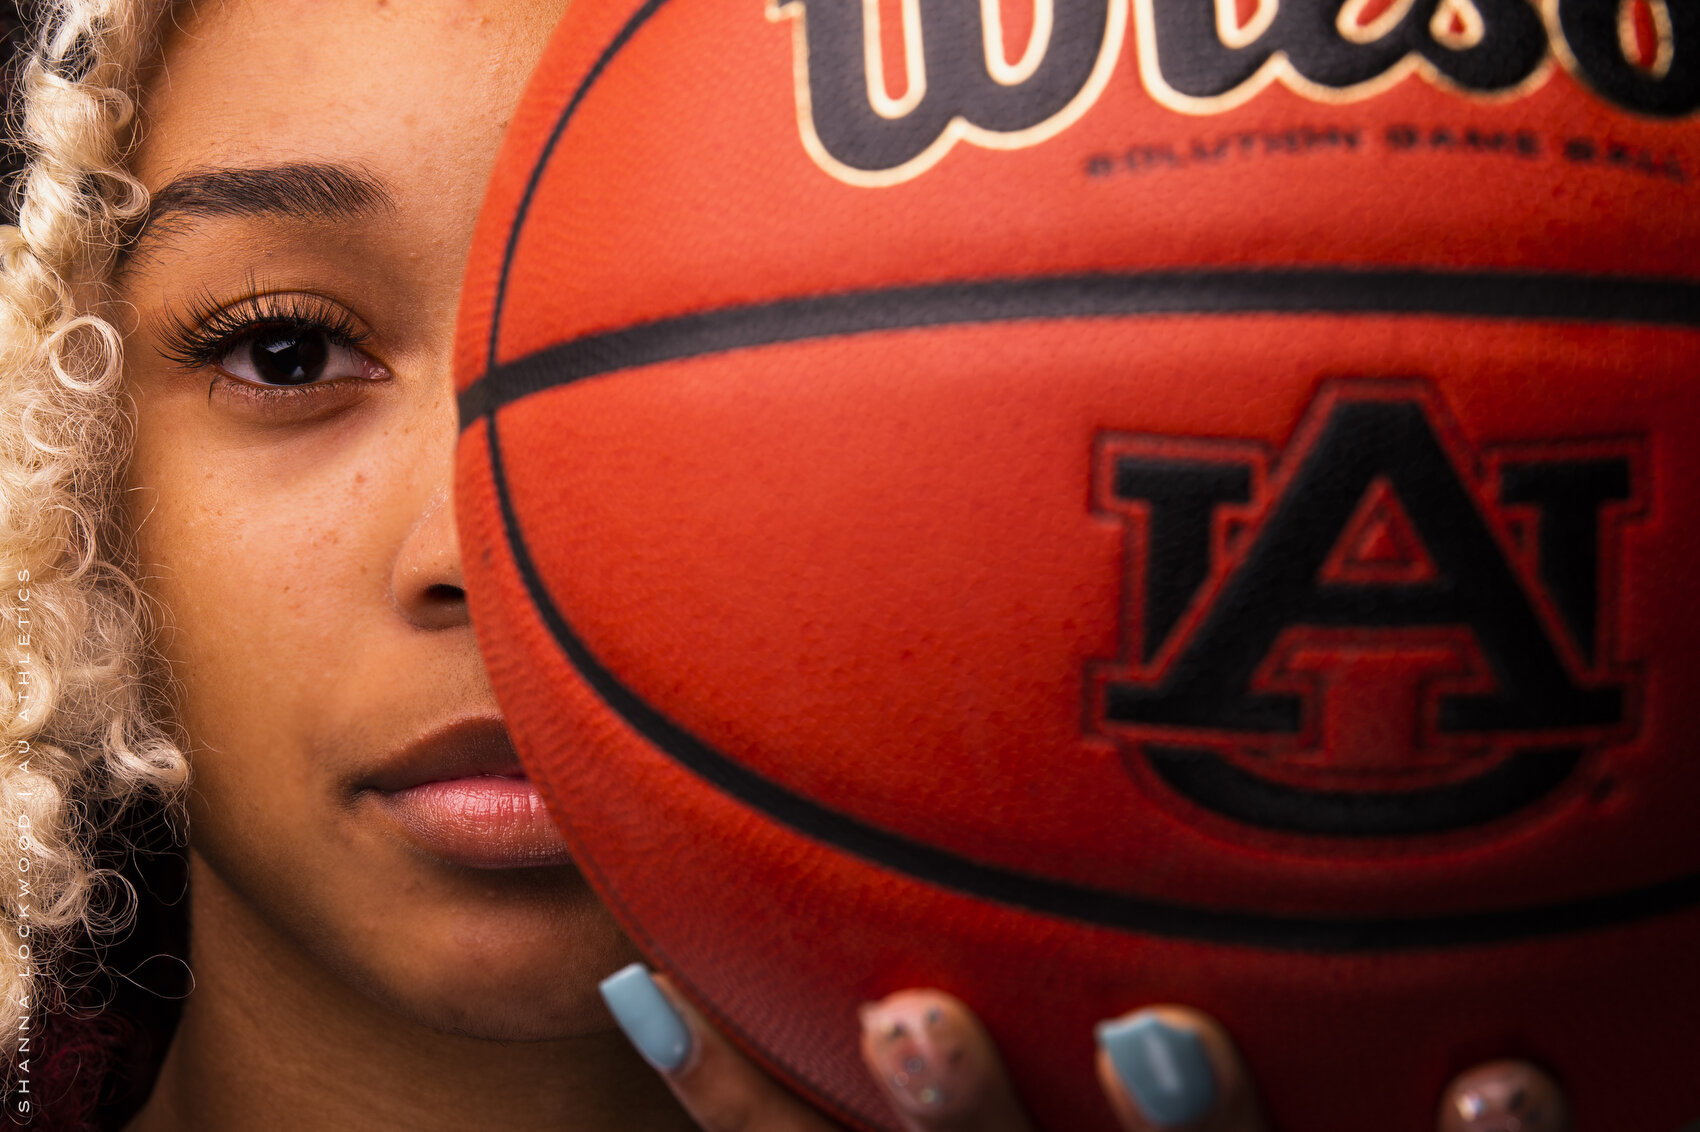  Dec 14, 2020; Auburn, AL, USA; Alaina Rice (22) poses for photos during women's basketball asset photo session at Auburn Arena. Mandatory Credit: Shanna Lockwood/AU Athletics 